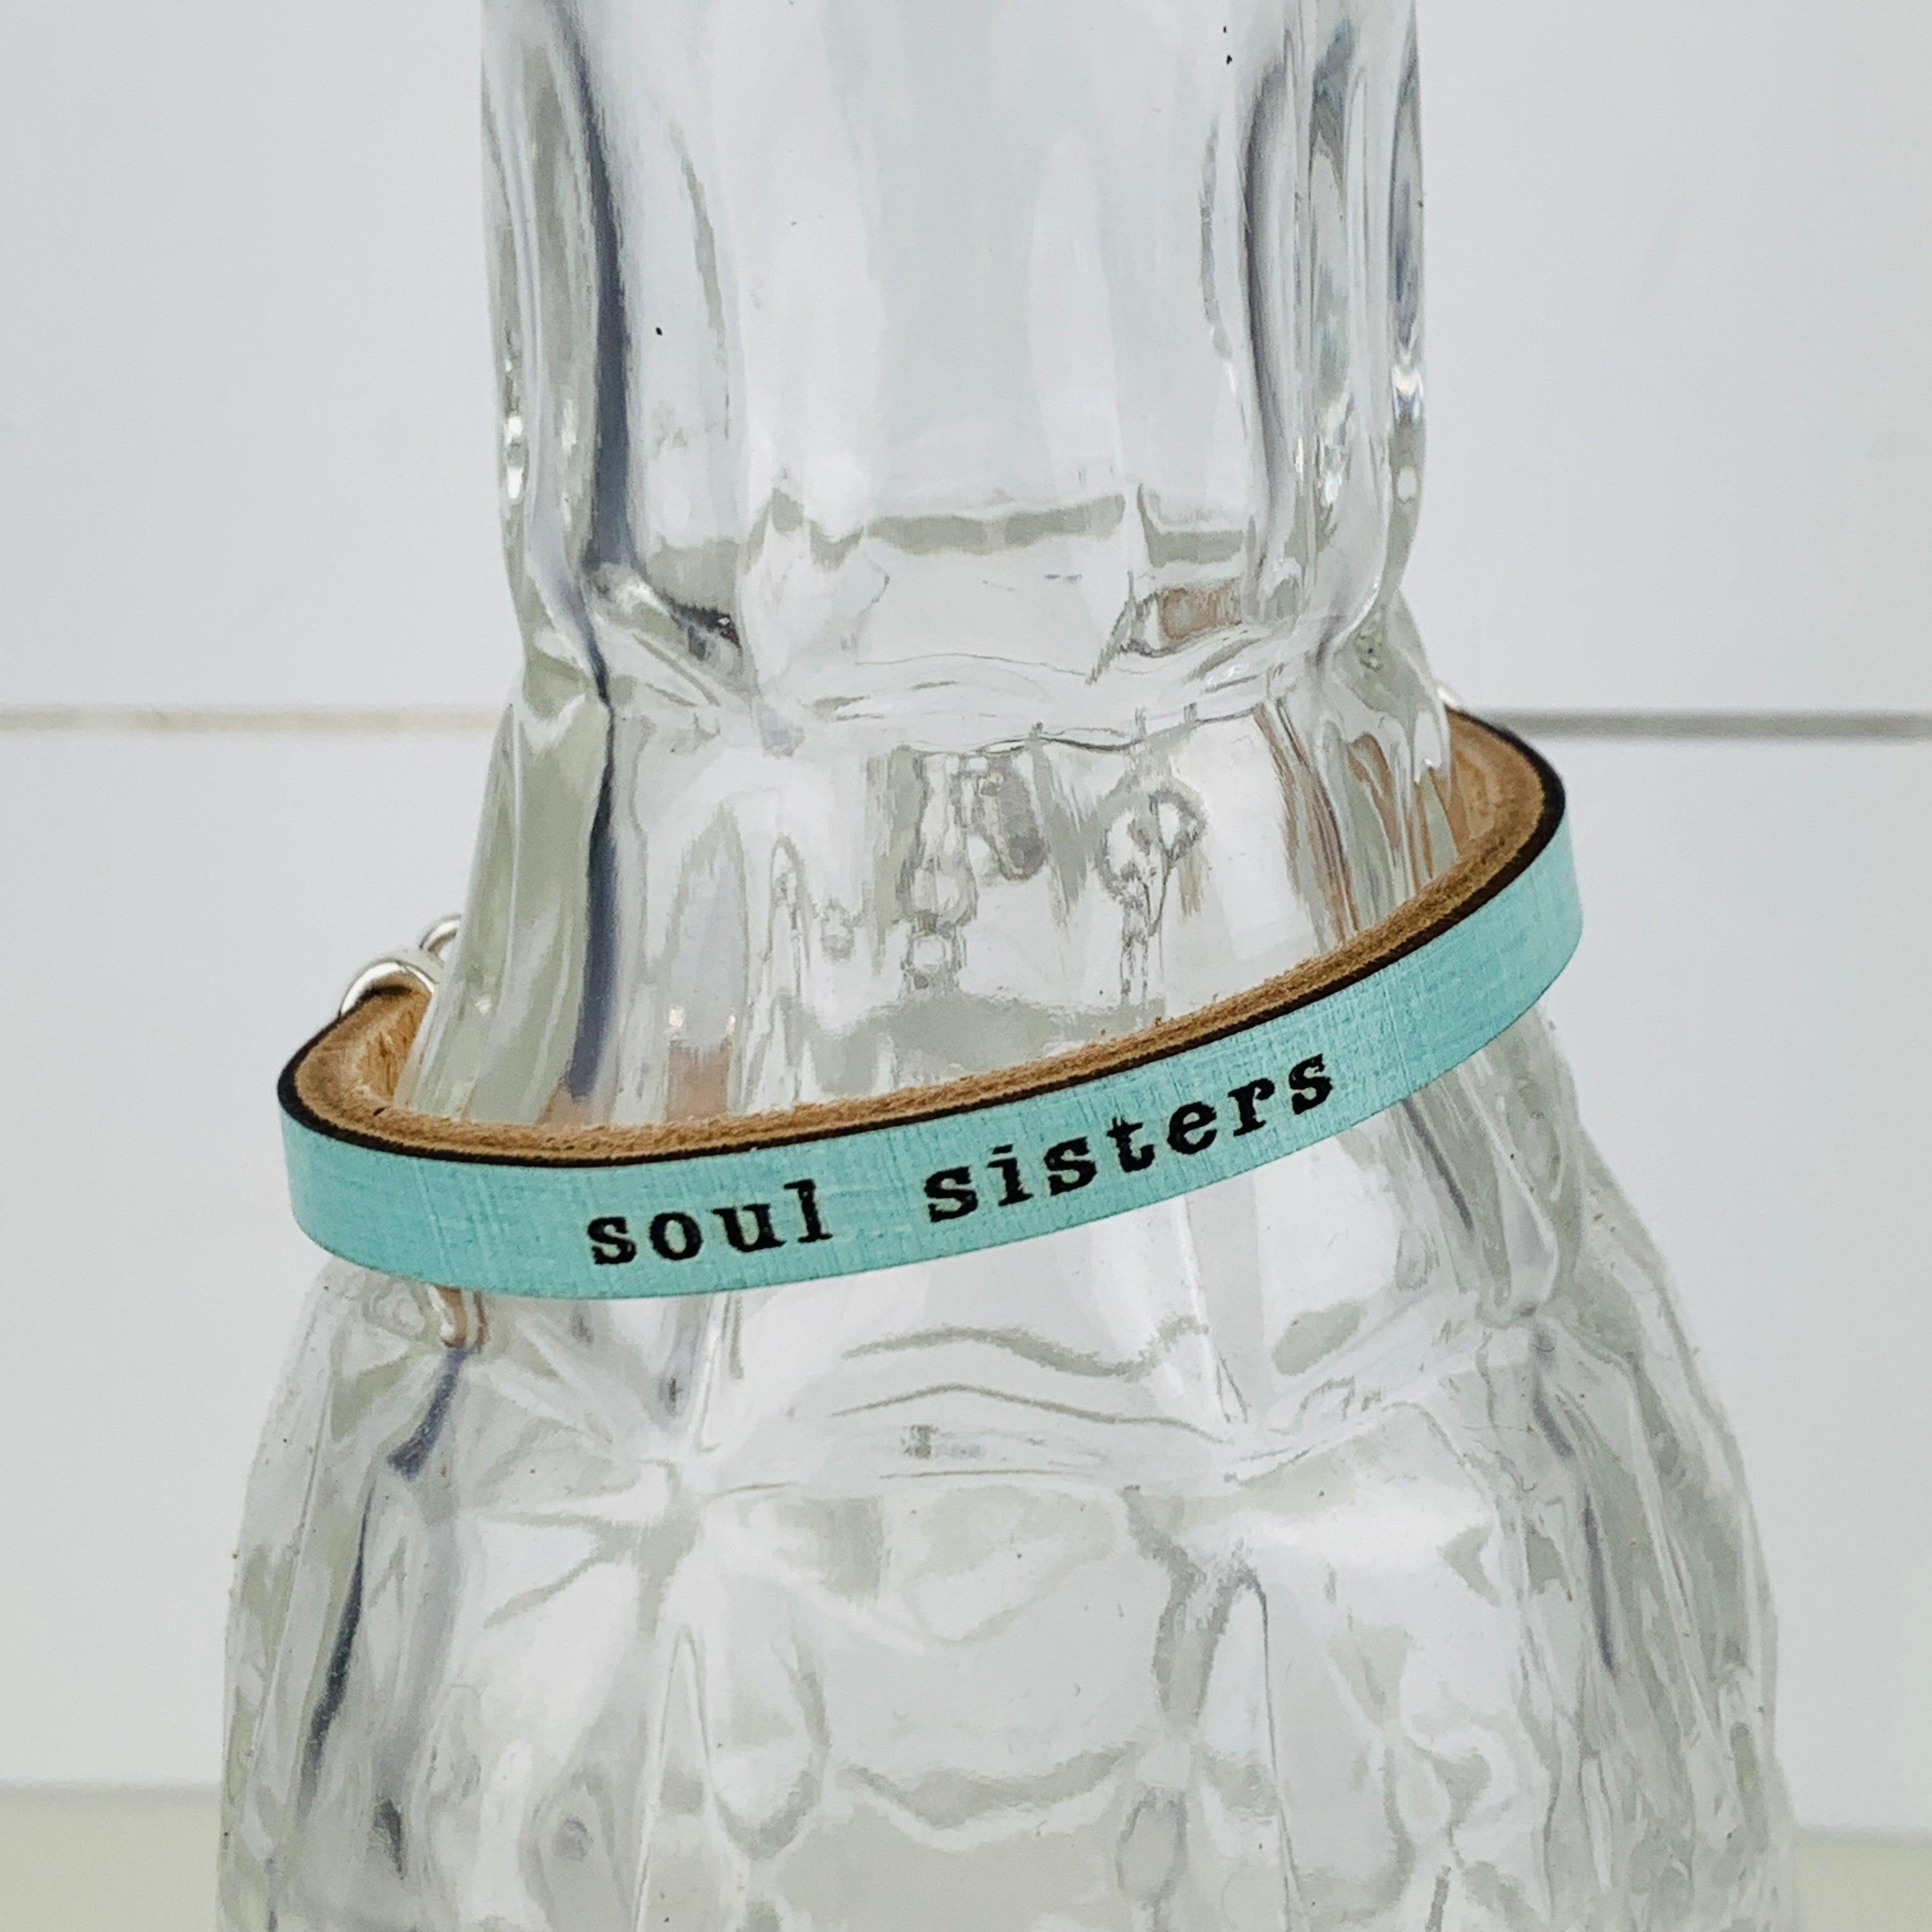 Soul Sisters Leather Bracelet - Vintage Soul